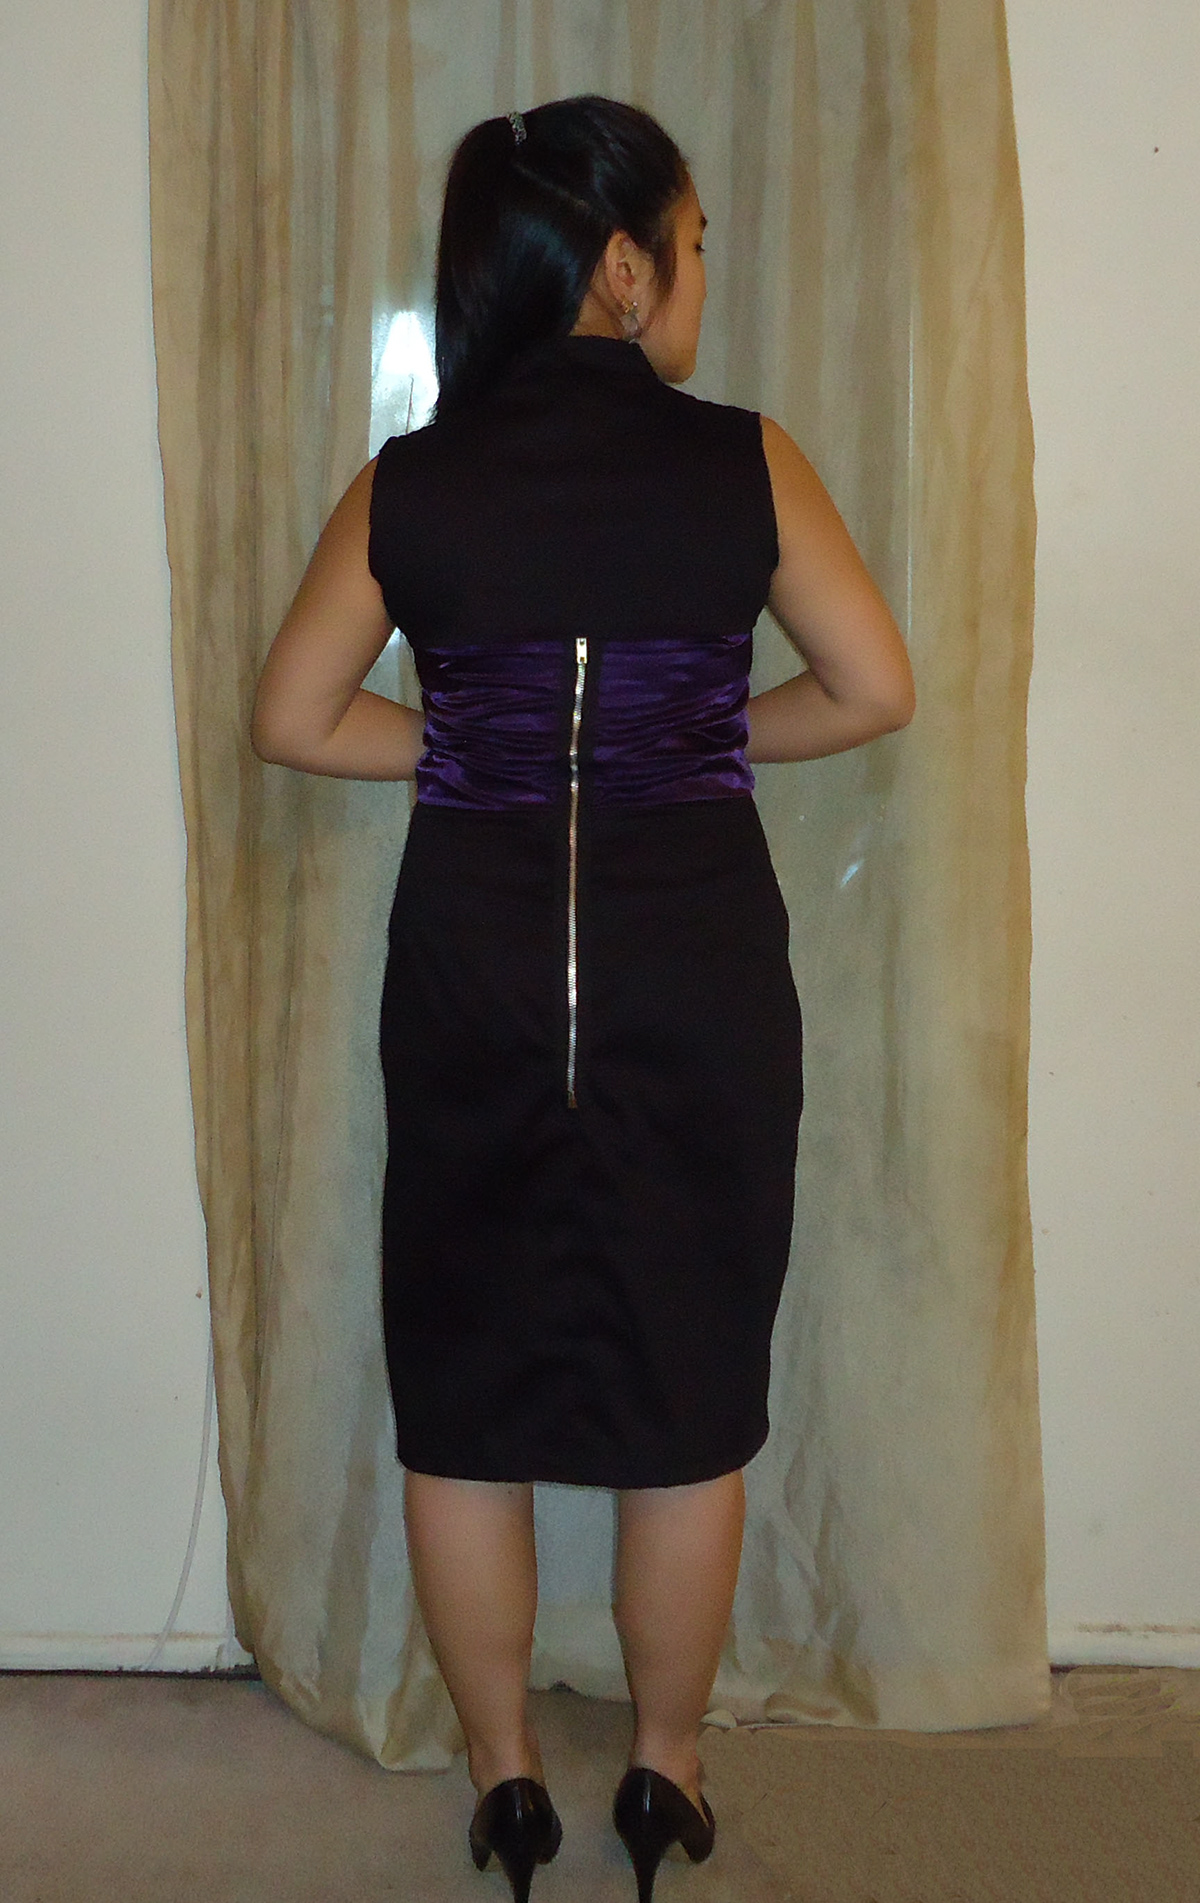 apparel dress design fashion design top lace skirt vest